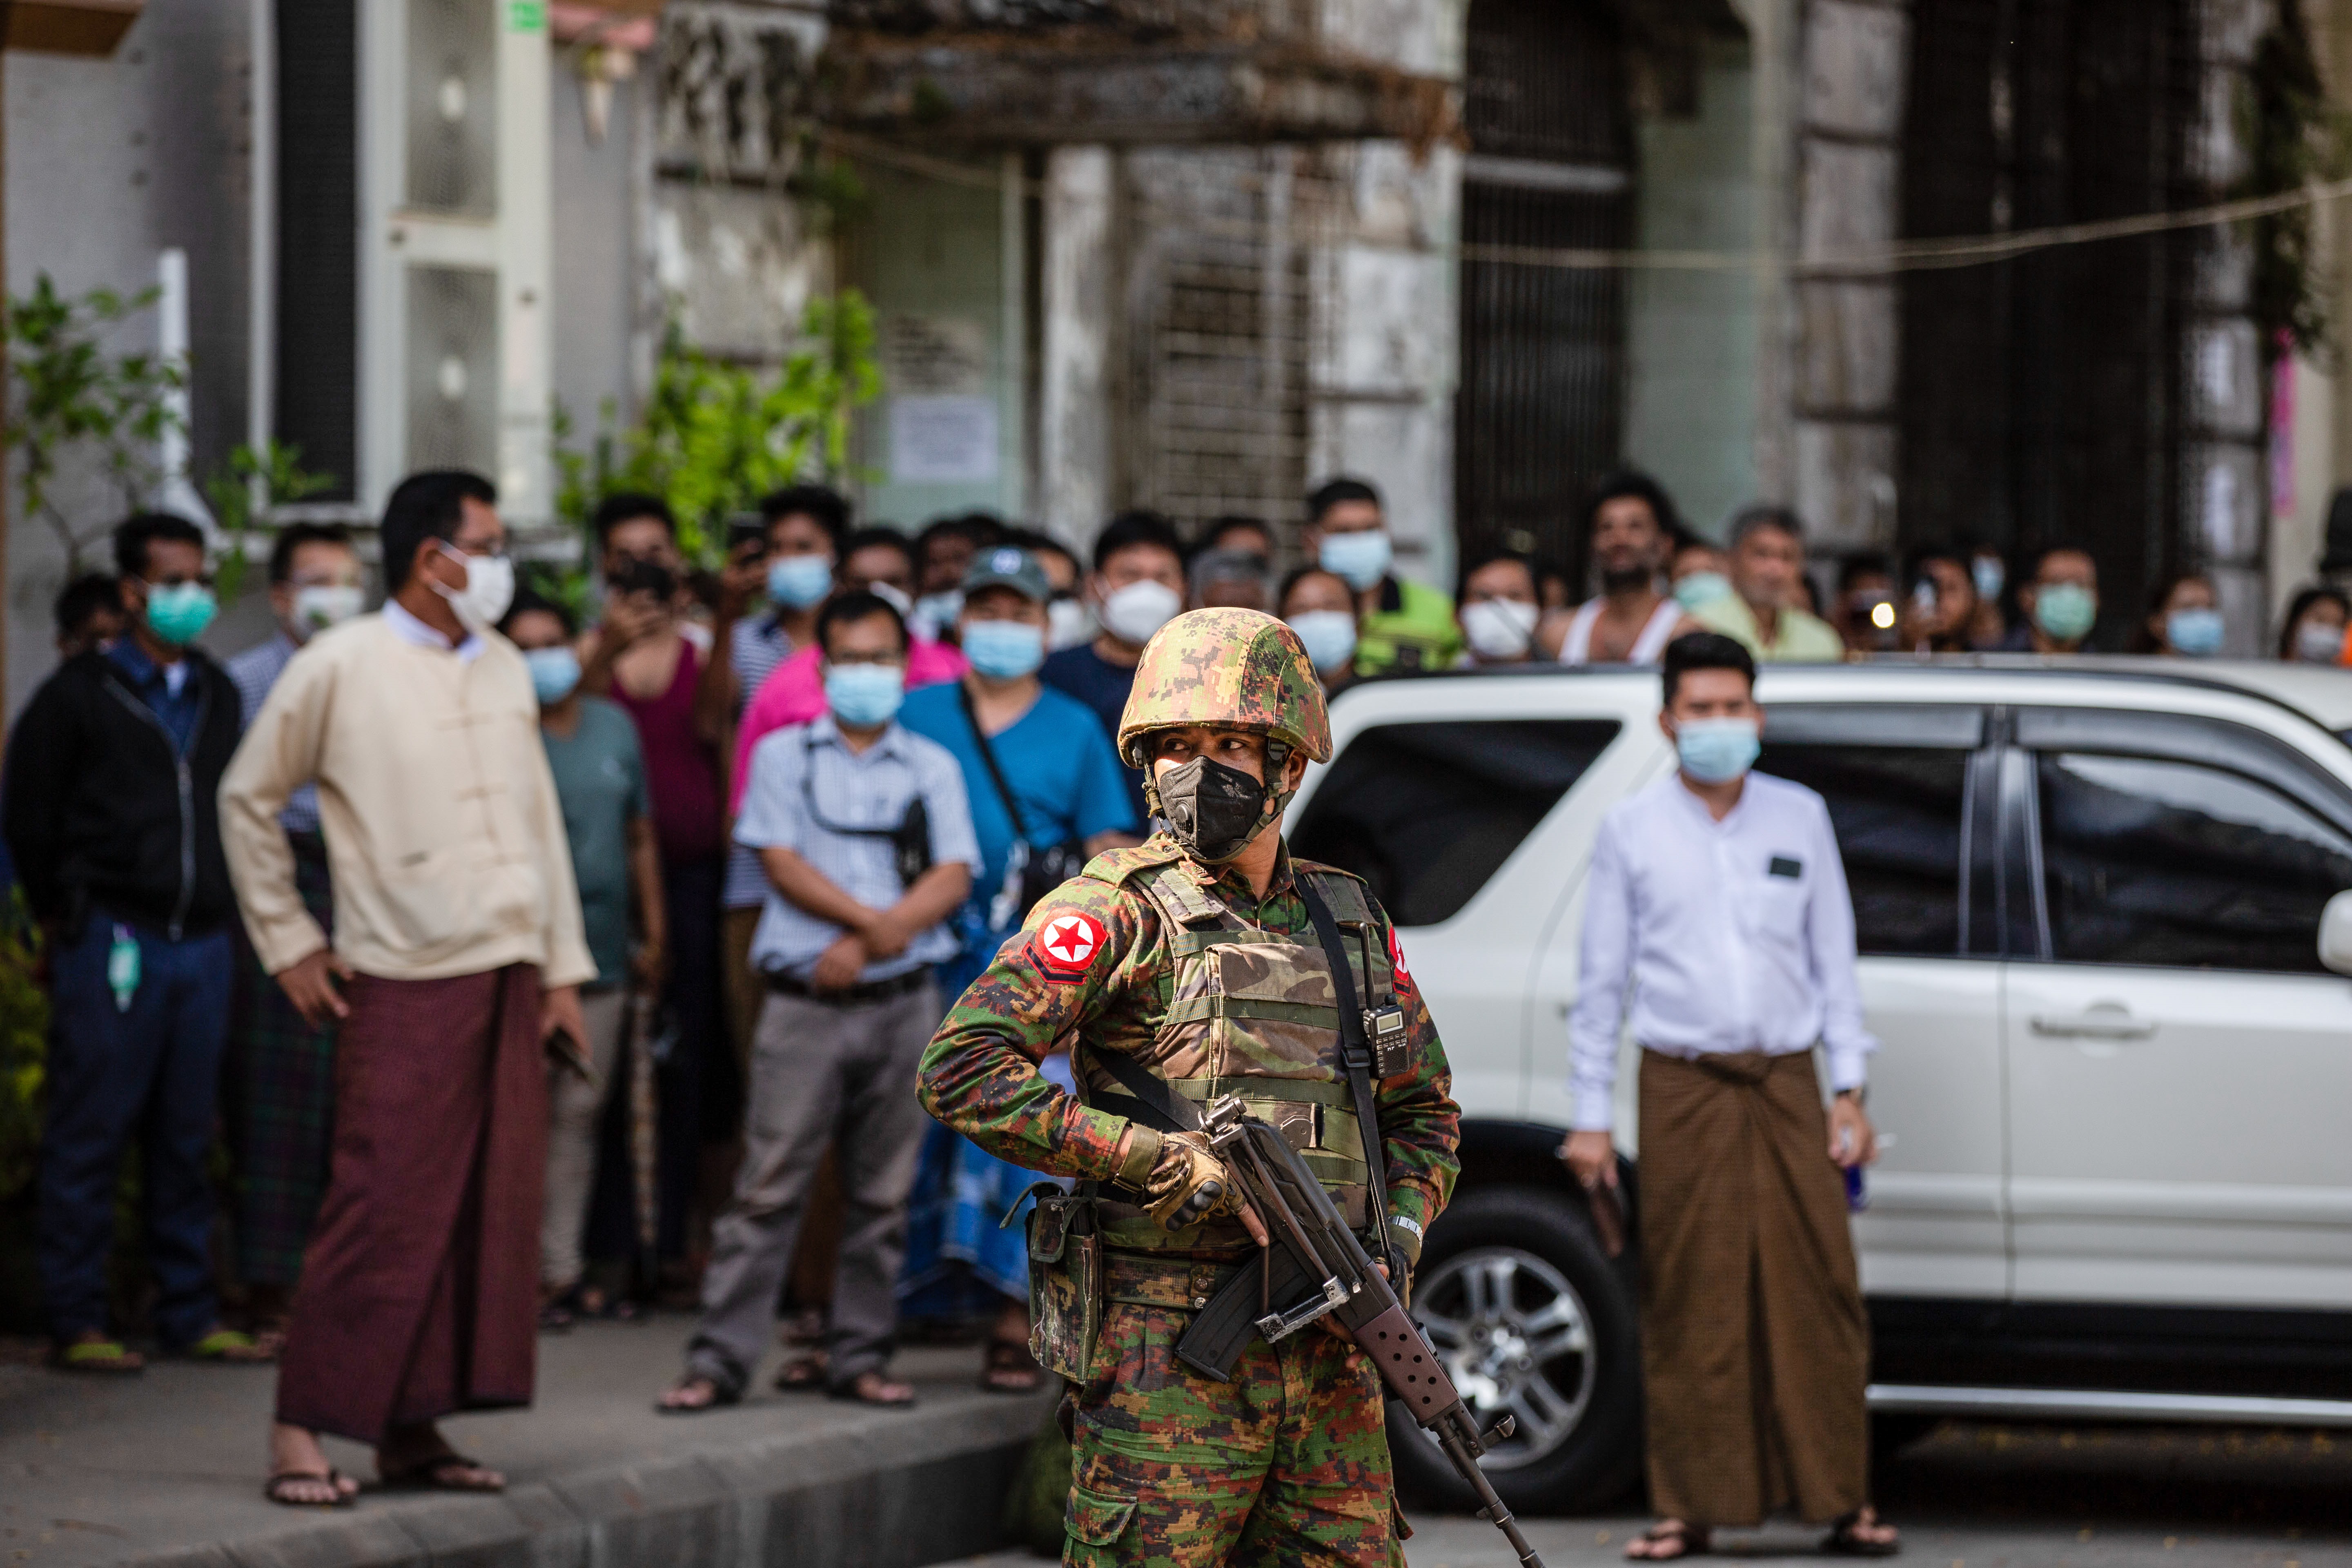 02/02/2021 Un militar patrulla una calle de Rangún, Birmania. AUNG KYAW HTET / ZUMA PRESS / CONTACTOPHOTO
